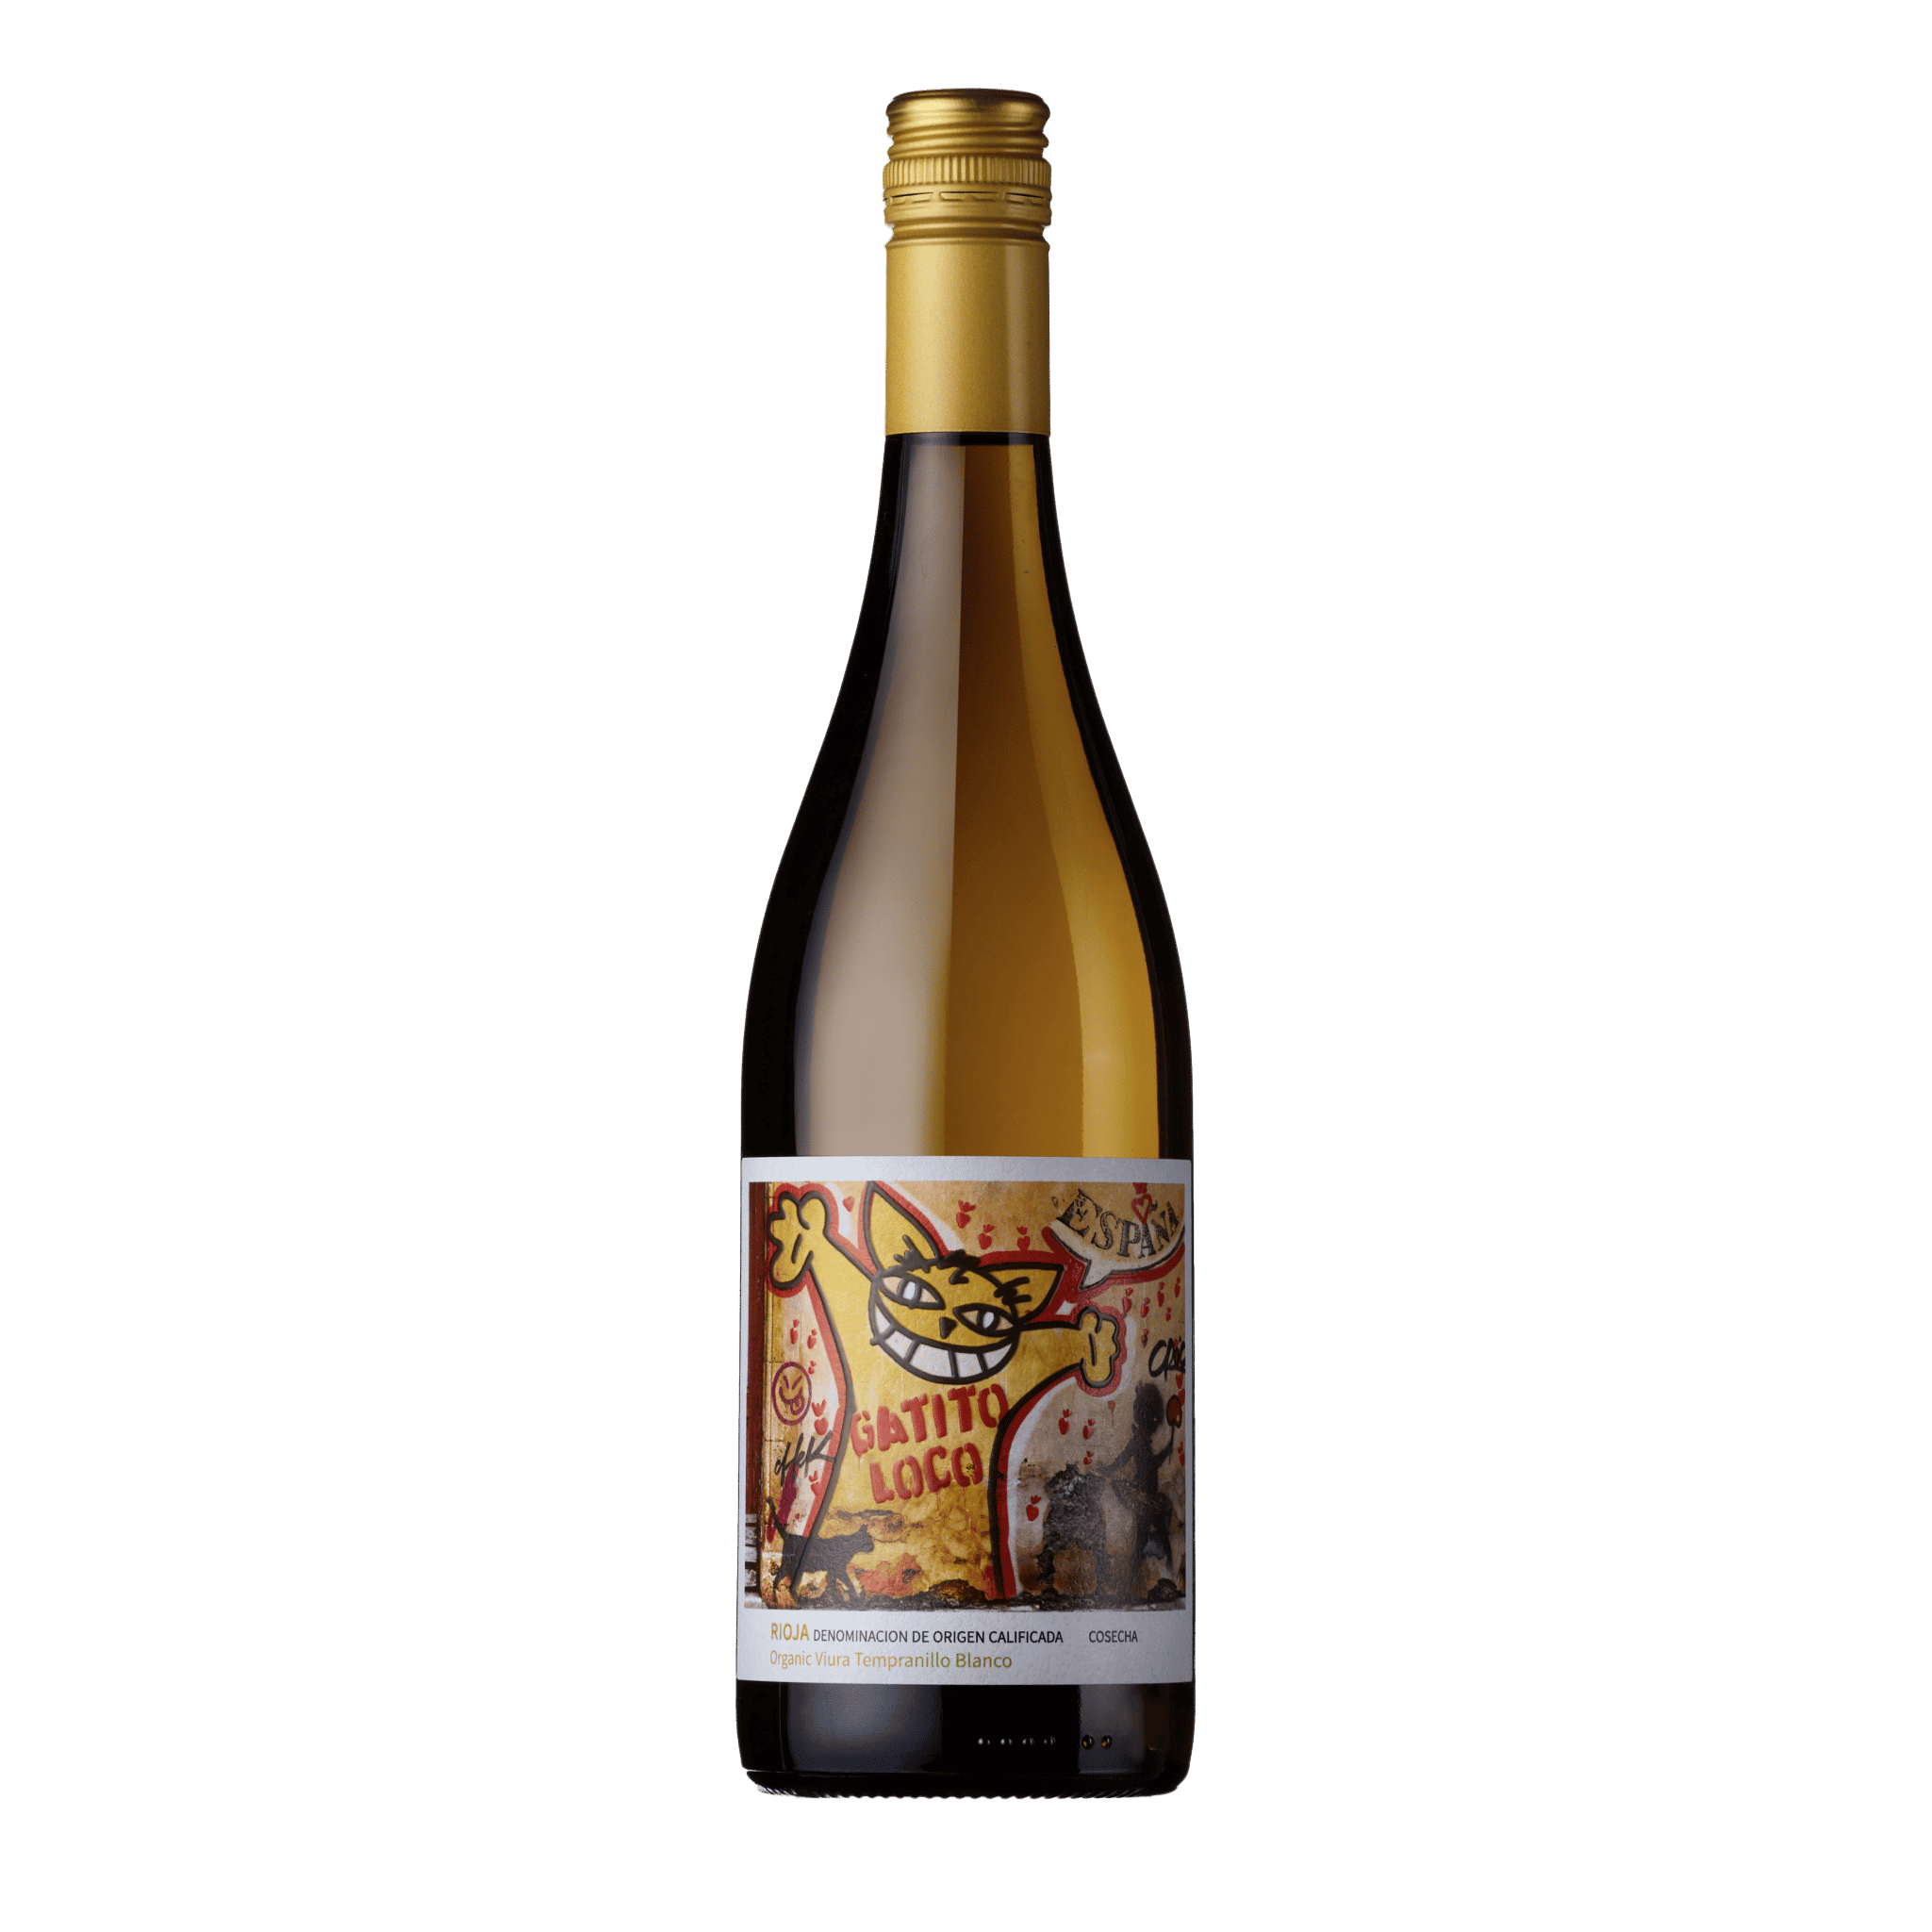 Gatito Loco Organic Rioja Blanco 2021